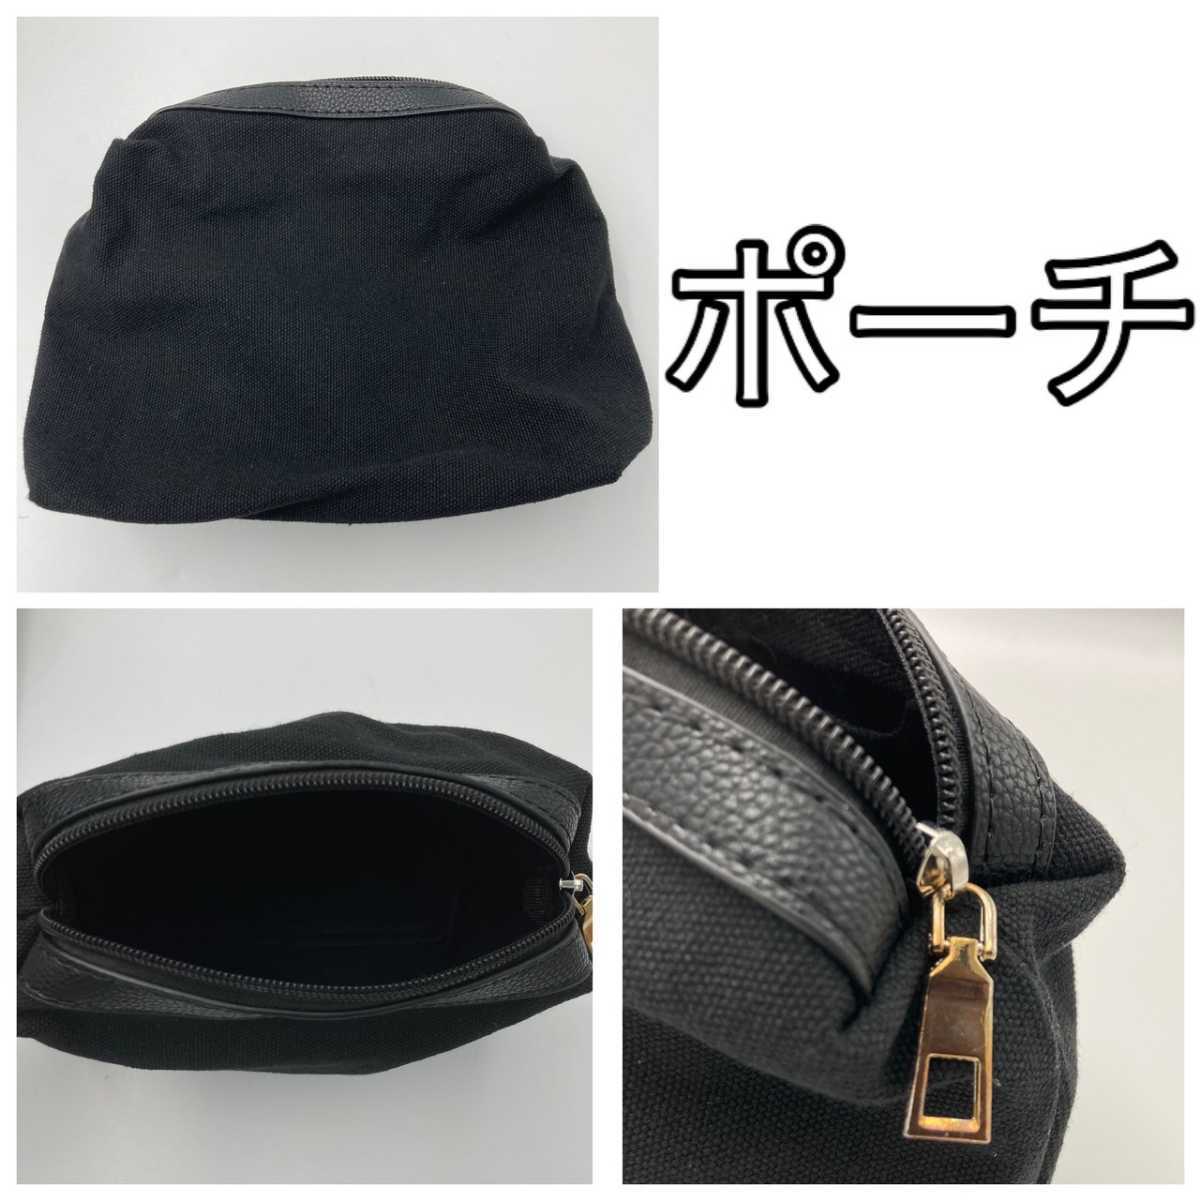  new goods unused lady's black black office te-to commuting square pouch shoulder bag handbag bag clean . adult 